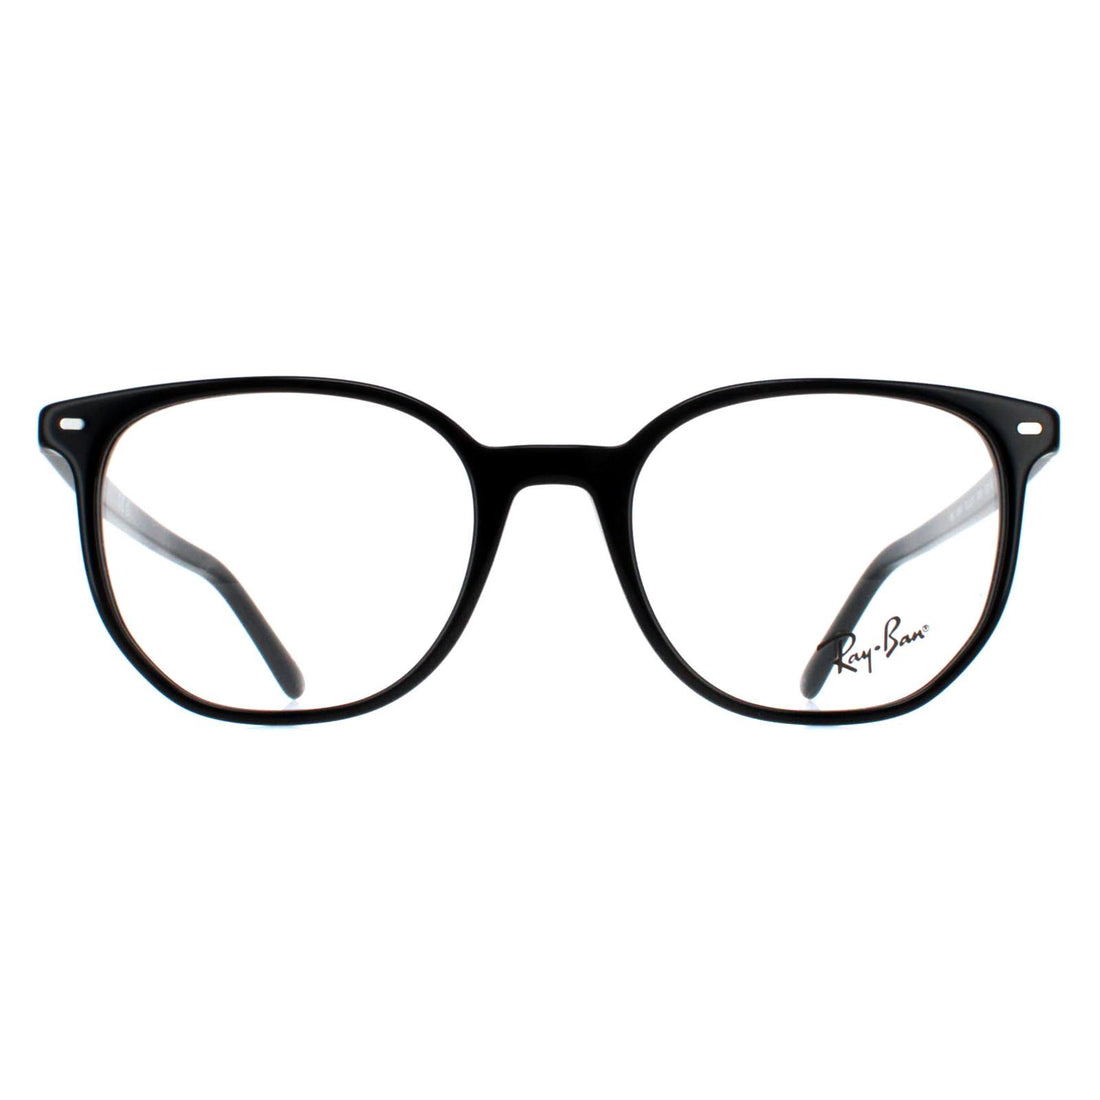 Ray-Ban RX5397 Elliot Glasses Frames Black